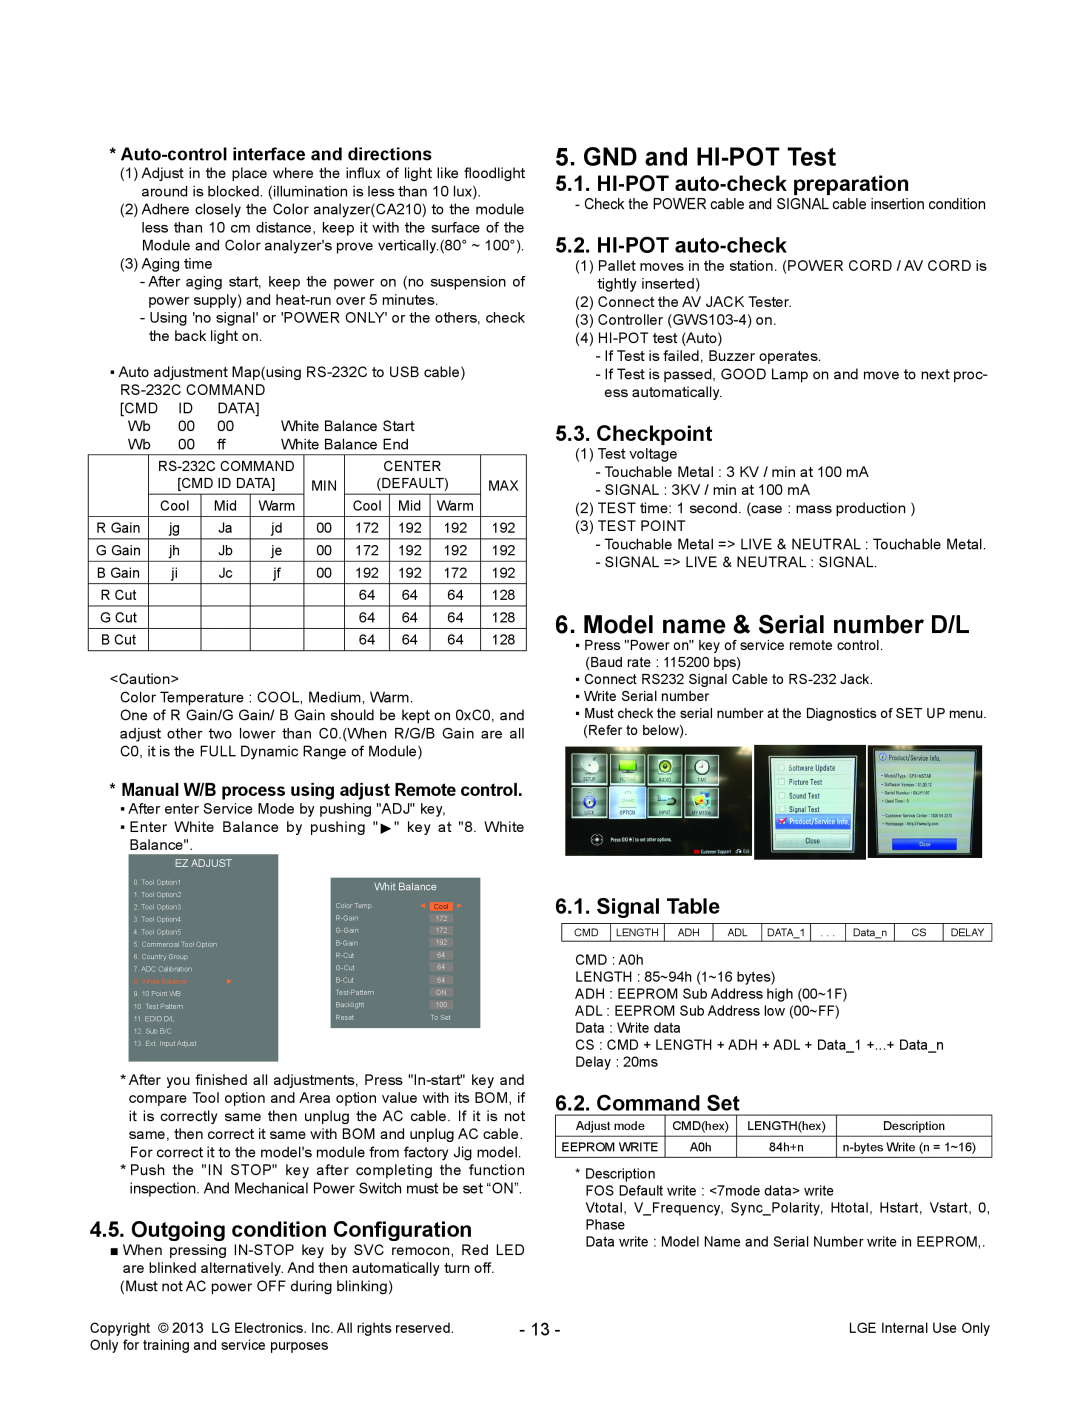 LG Electronics 549C-ZA GND and HI-POT Test, Model name & Serial number D/L, HI-POT auto-check preparation, Checkpoint 